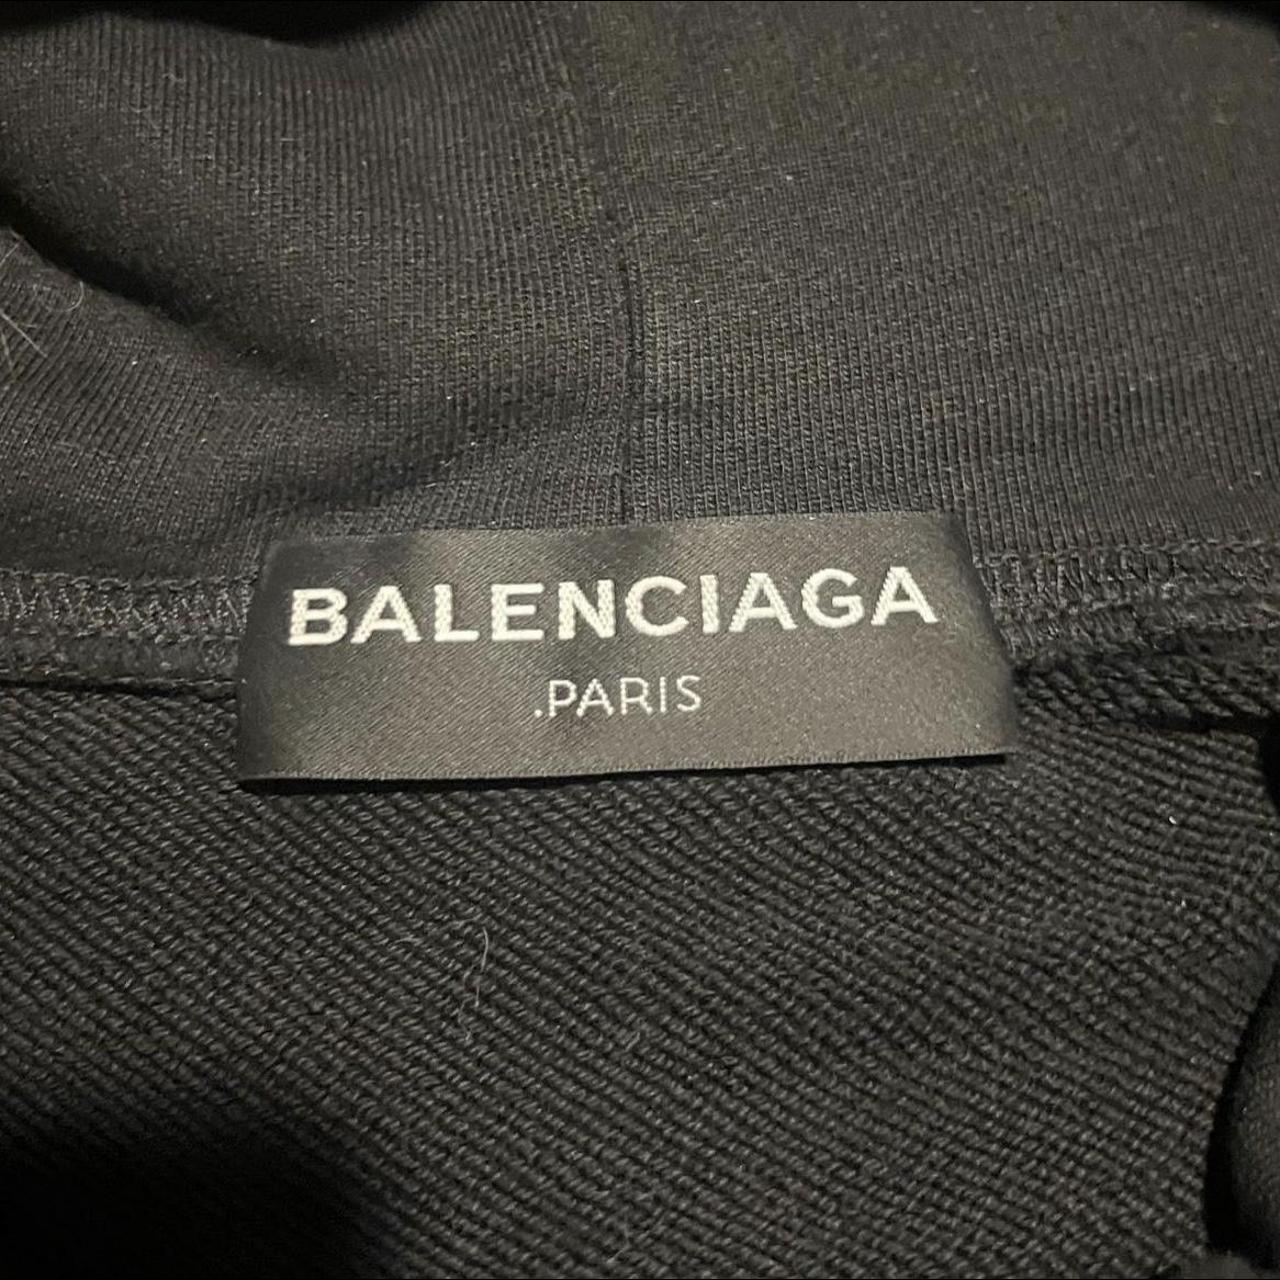 Balenciaga Paris hoodie - Depop